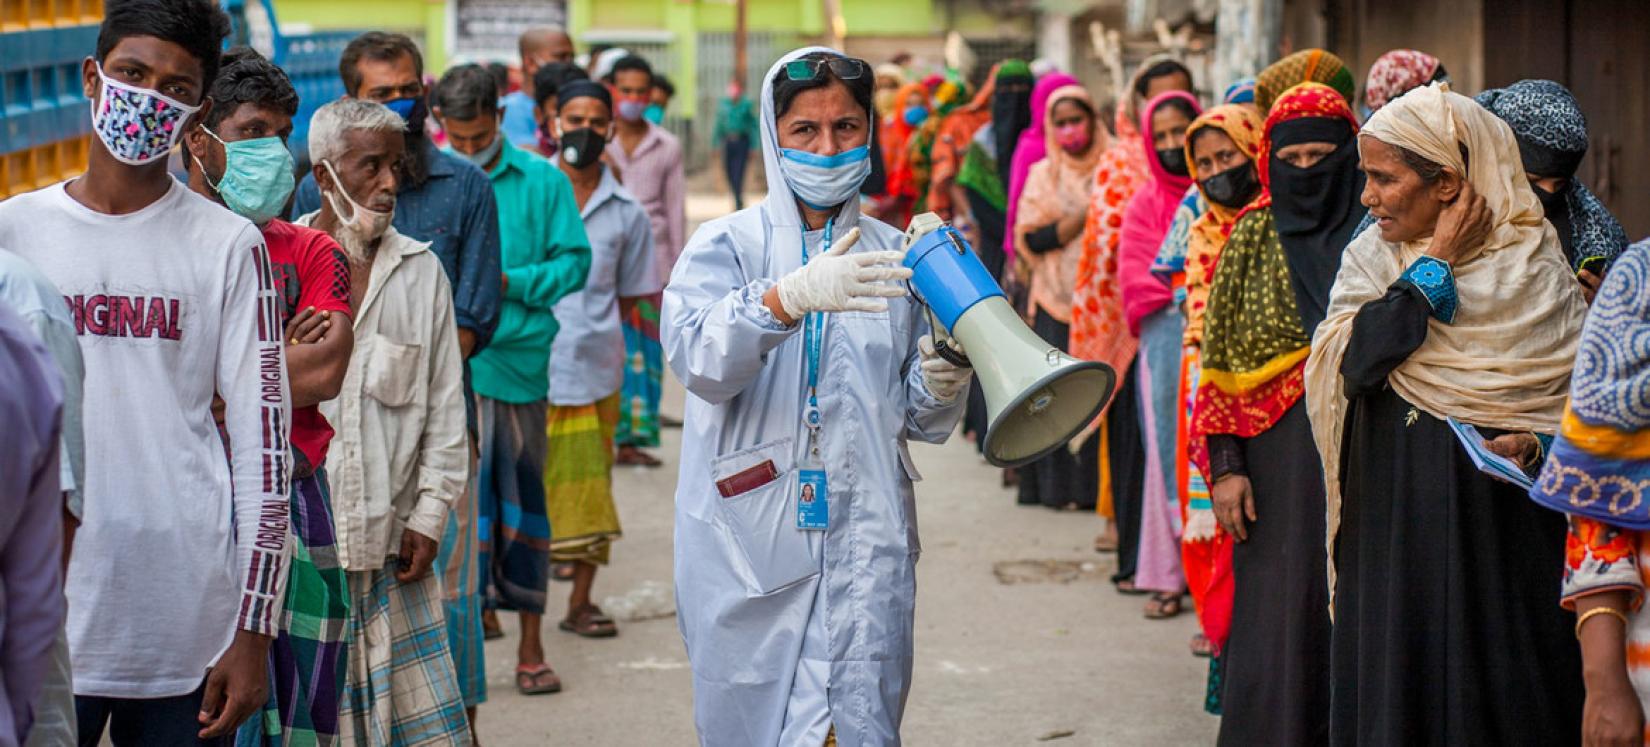 Раздача продуктов питания во время пандемии коронавируса в Бангладеш. 